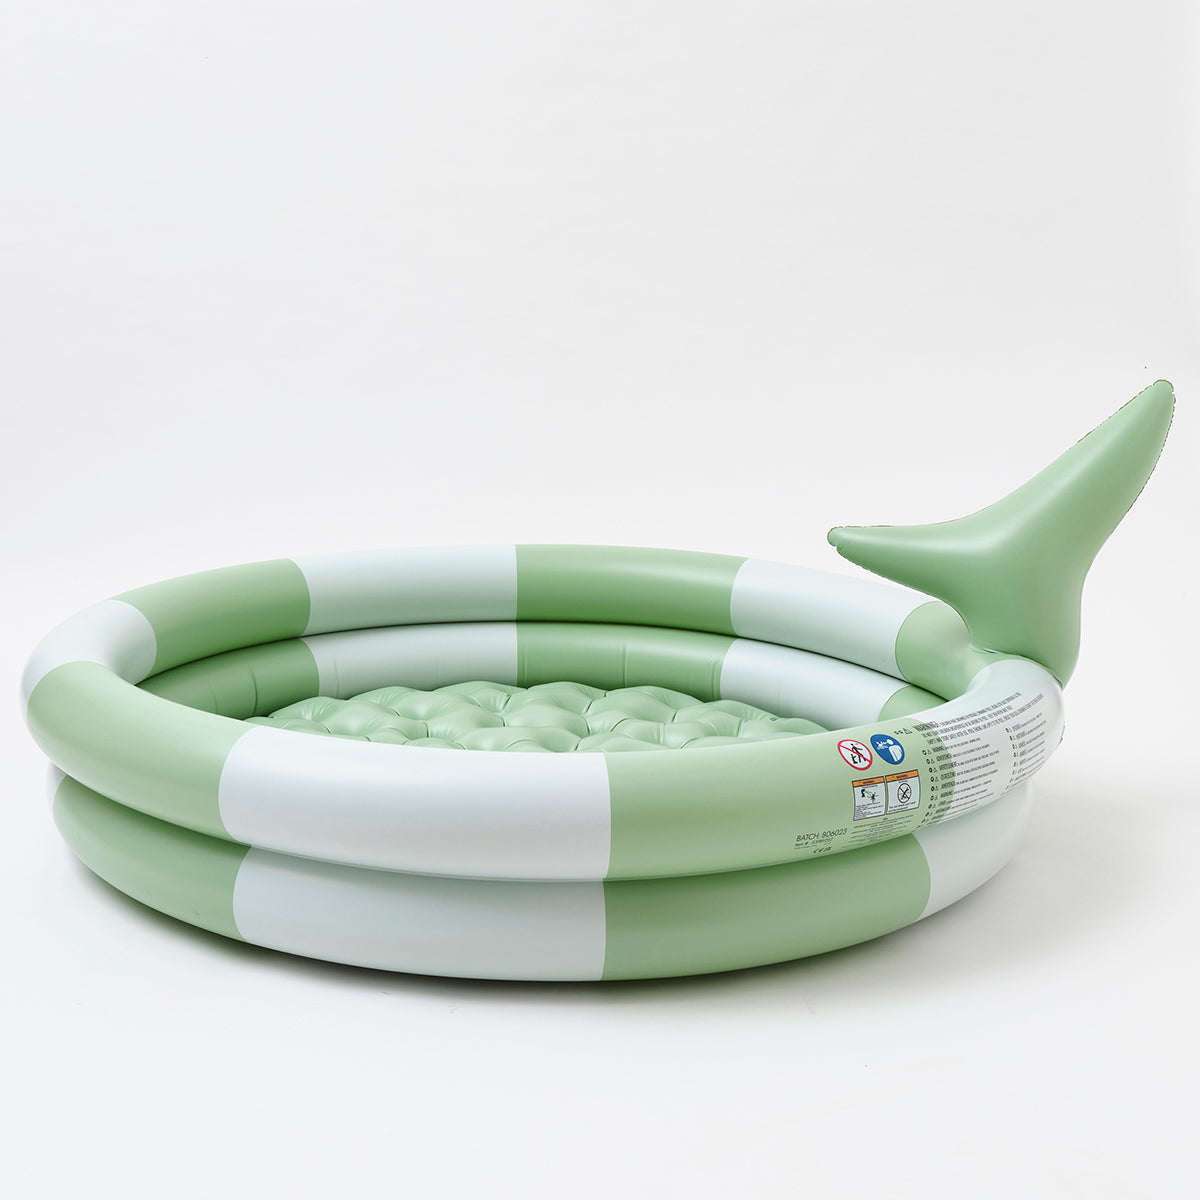 SUNNYLiFE Inflatable Backyard Pool - Shark Tribe Khaki